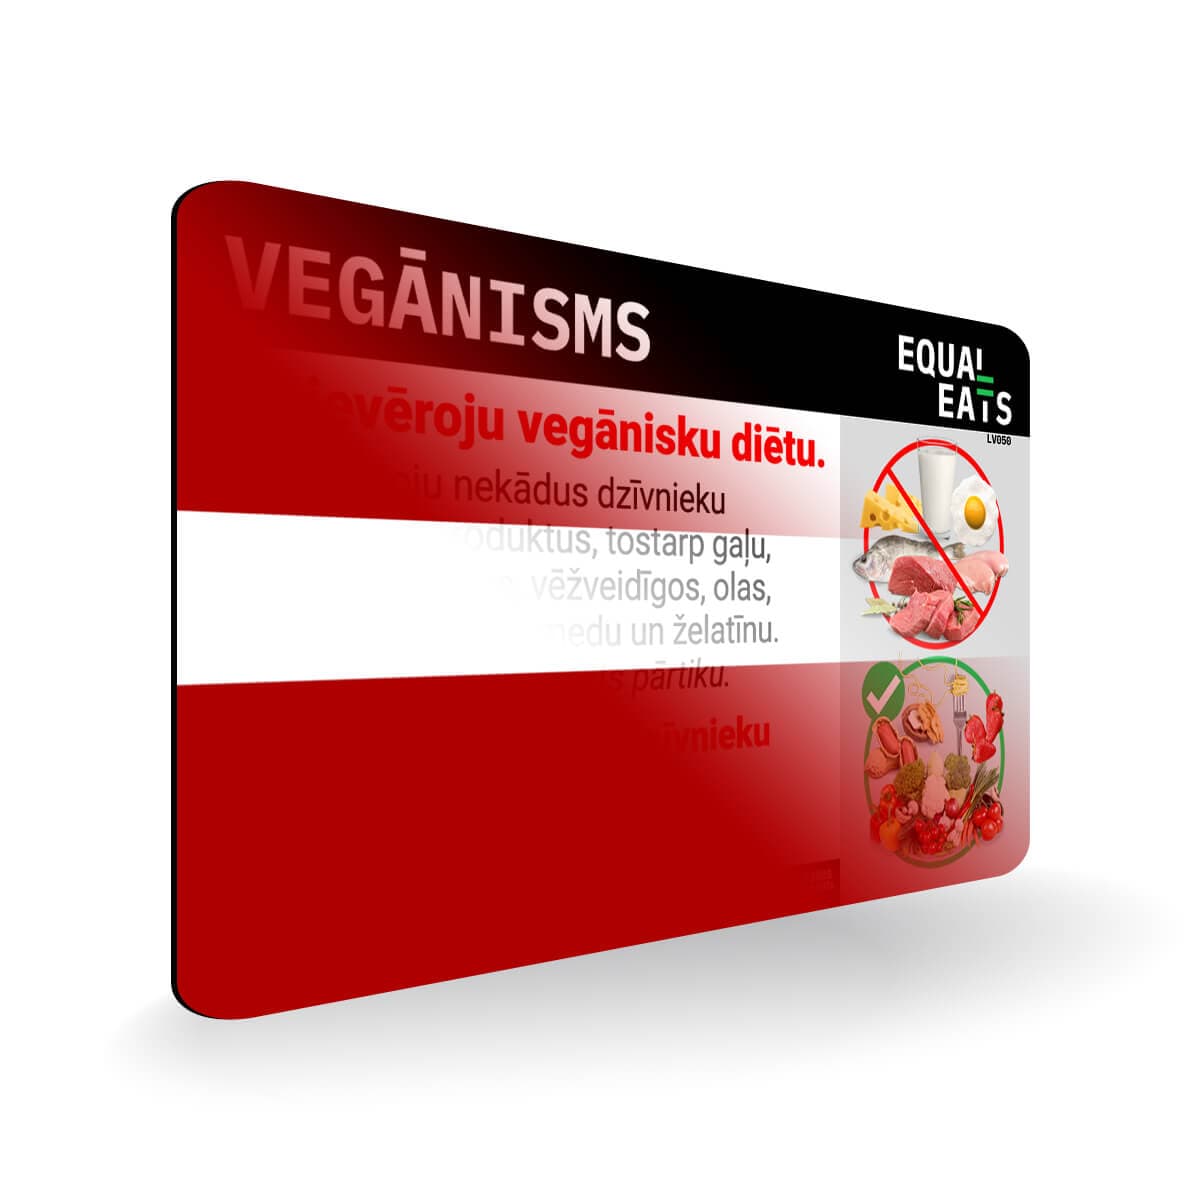 Vegan Diet in Latvian. Vegan Card for Latvia